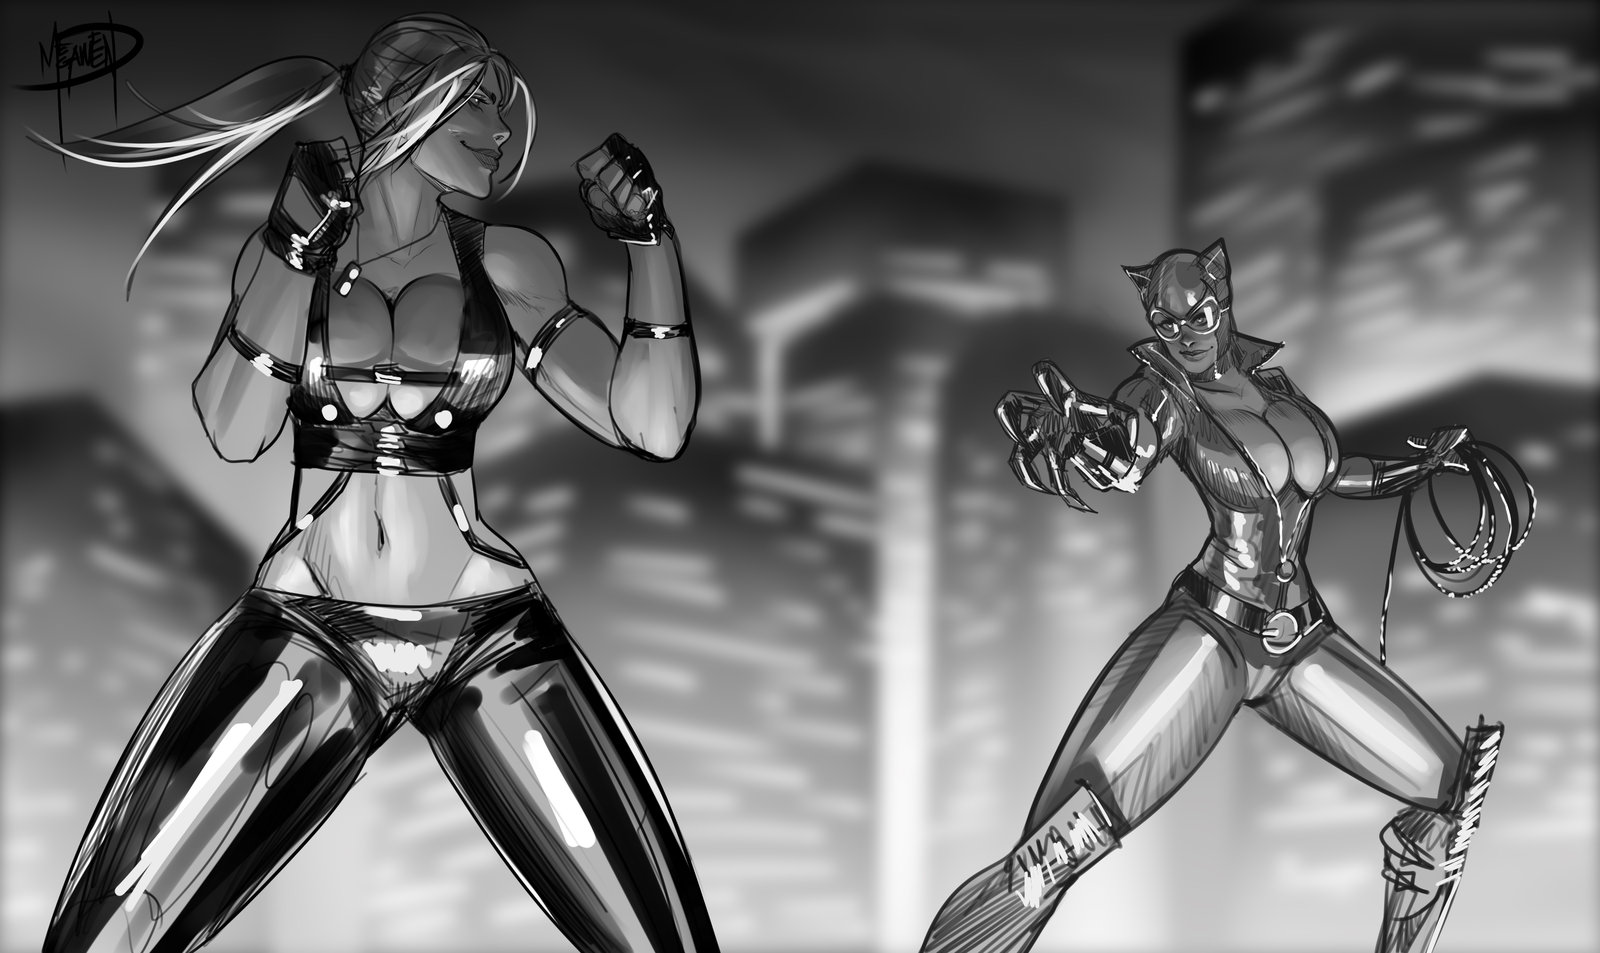 Sonya Blade vs Catwoman by megaween